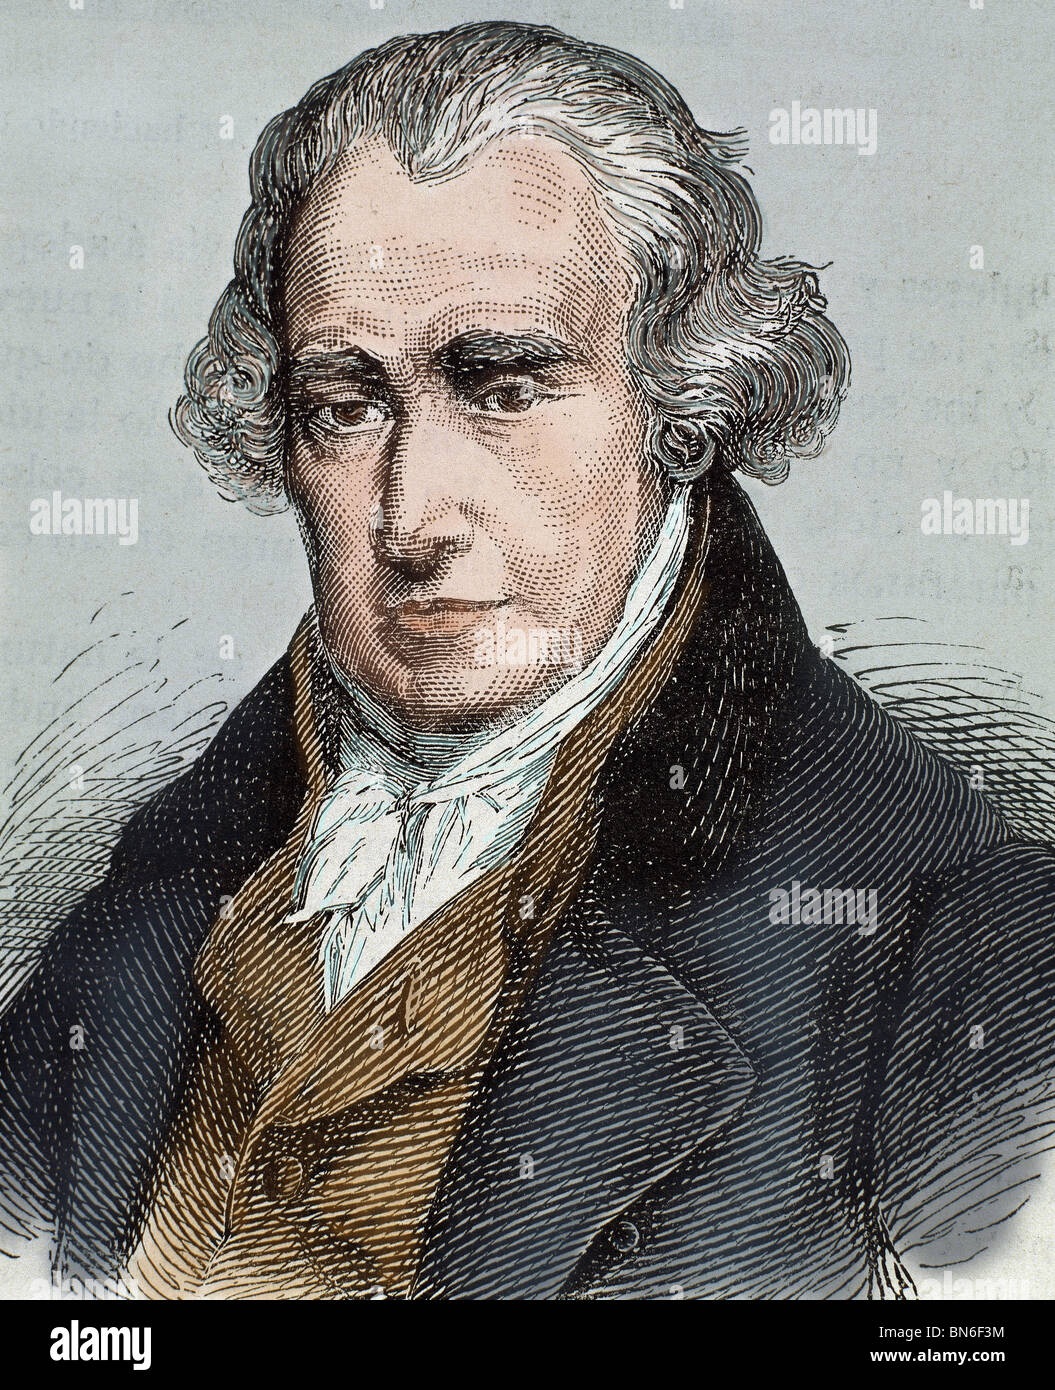 WATT, James (1736-Heathfield Greenok, 1819). Inventor e ingeniero mecánico escocés. Grabado del siglo xix. Foto de stock